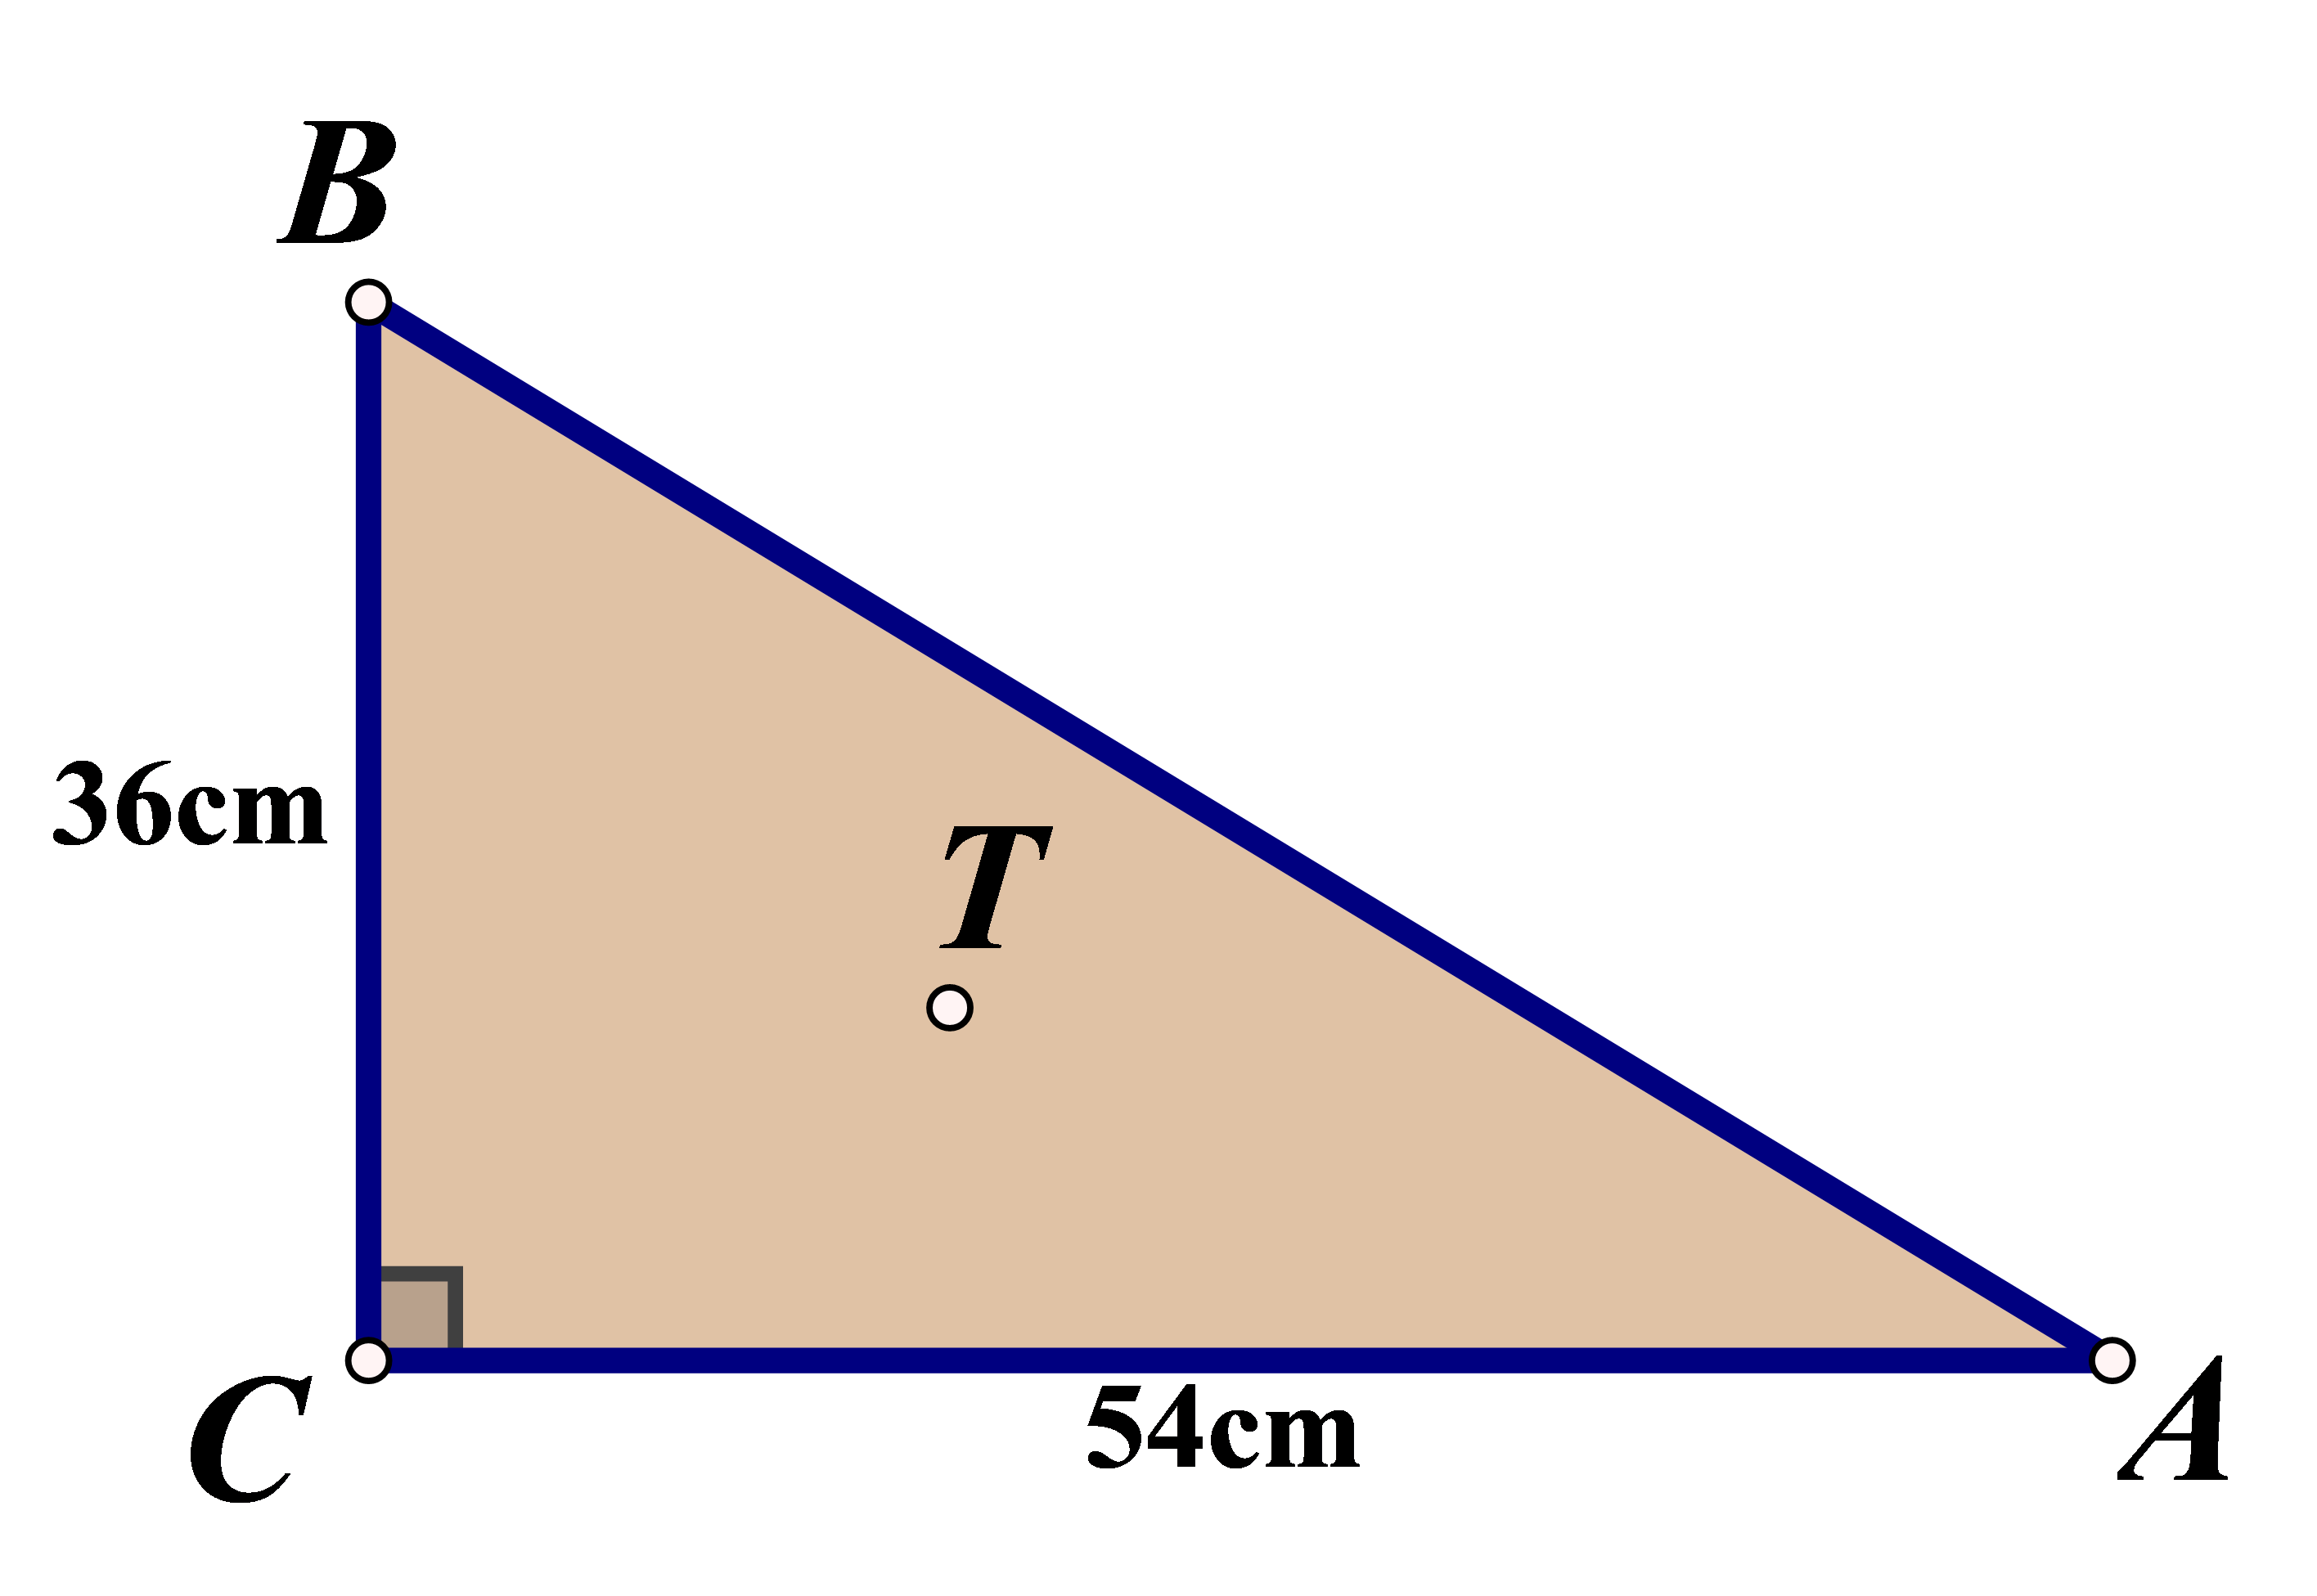 Stolić u obliku pravokutnog trokuta s katetama duljina 36 cm i 54 cm. .